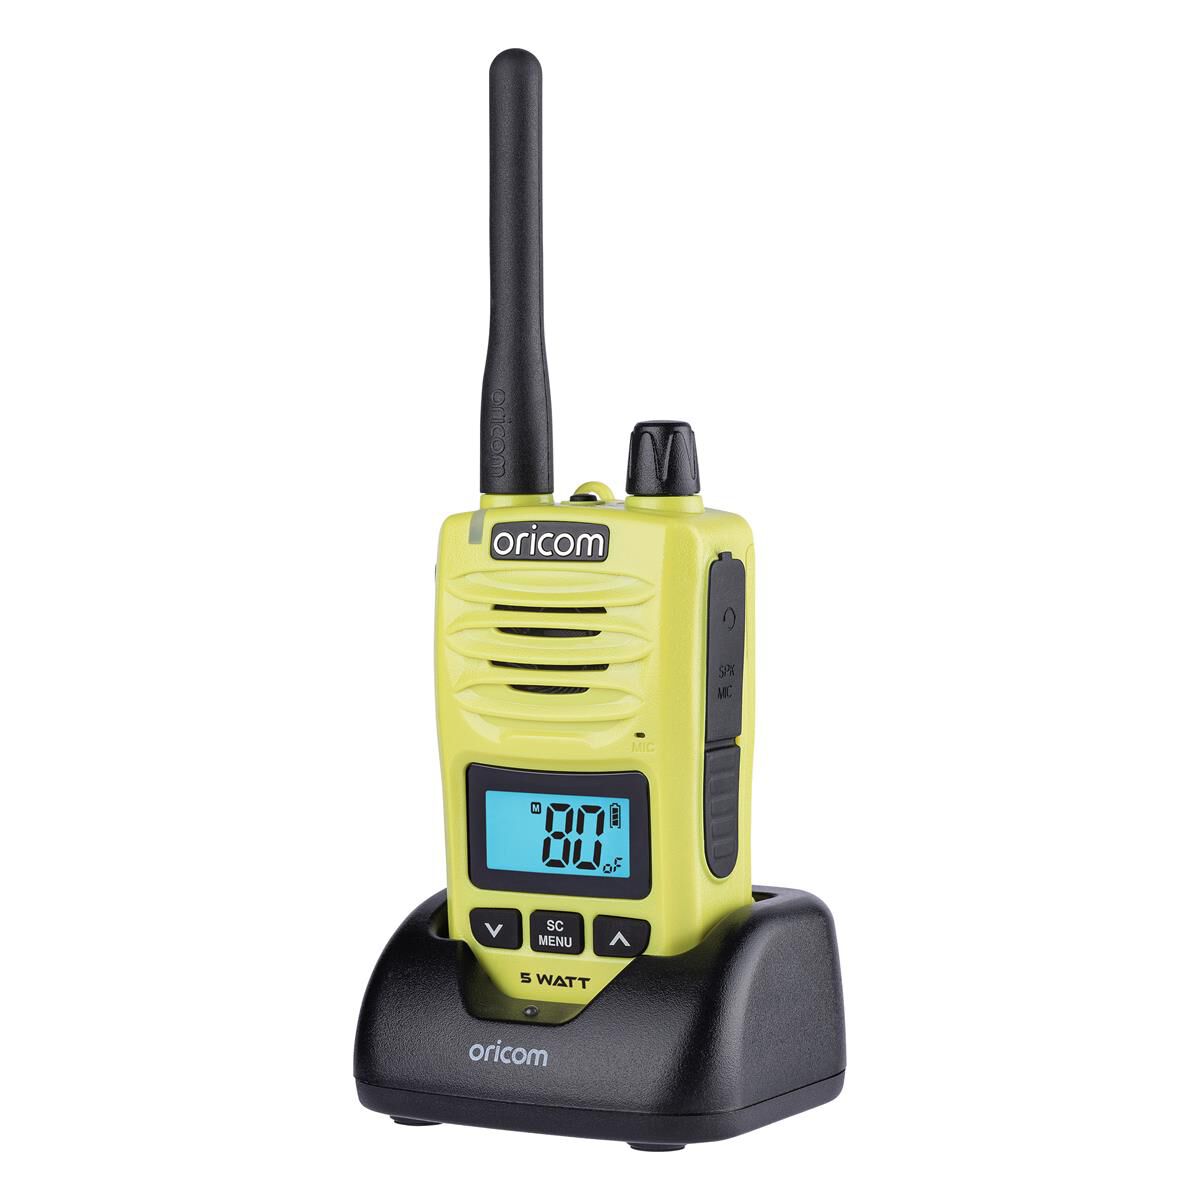 WATERPROOF IP67 PORTABLE 5W UHF CB RADIO LIME, , scaau_hi-res